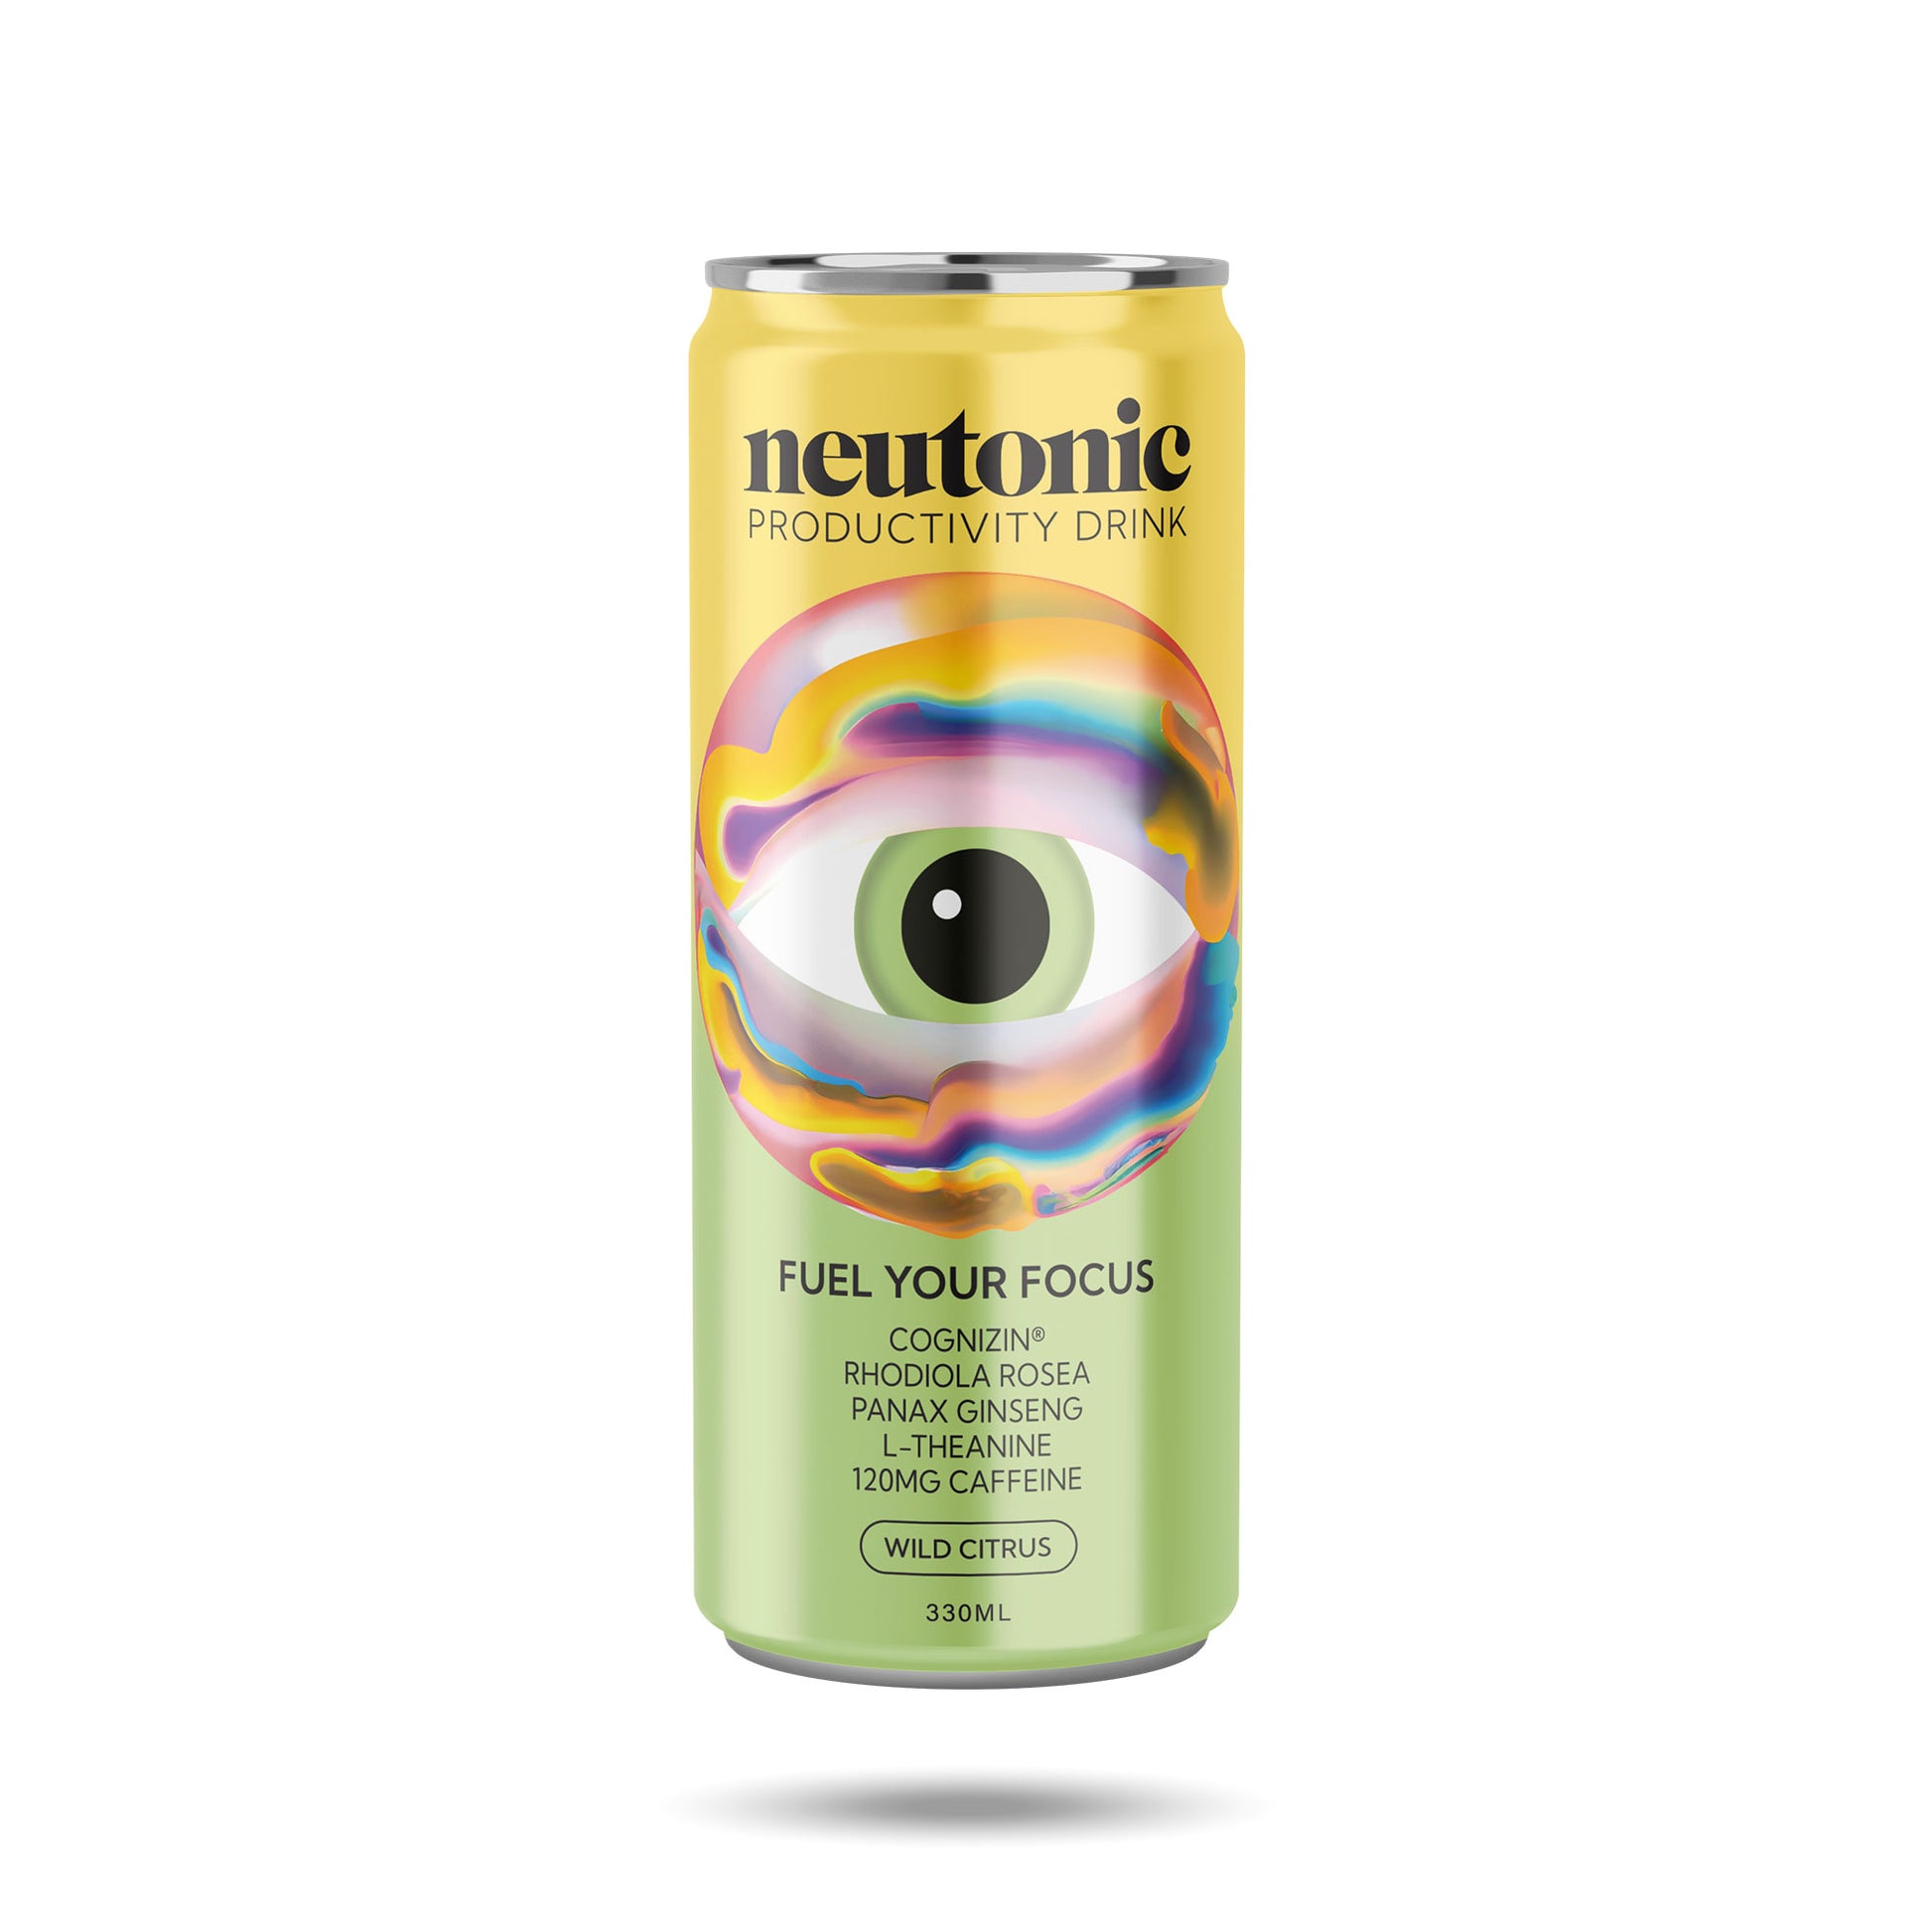 Neutonic wild citrus product image front